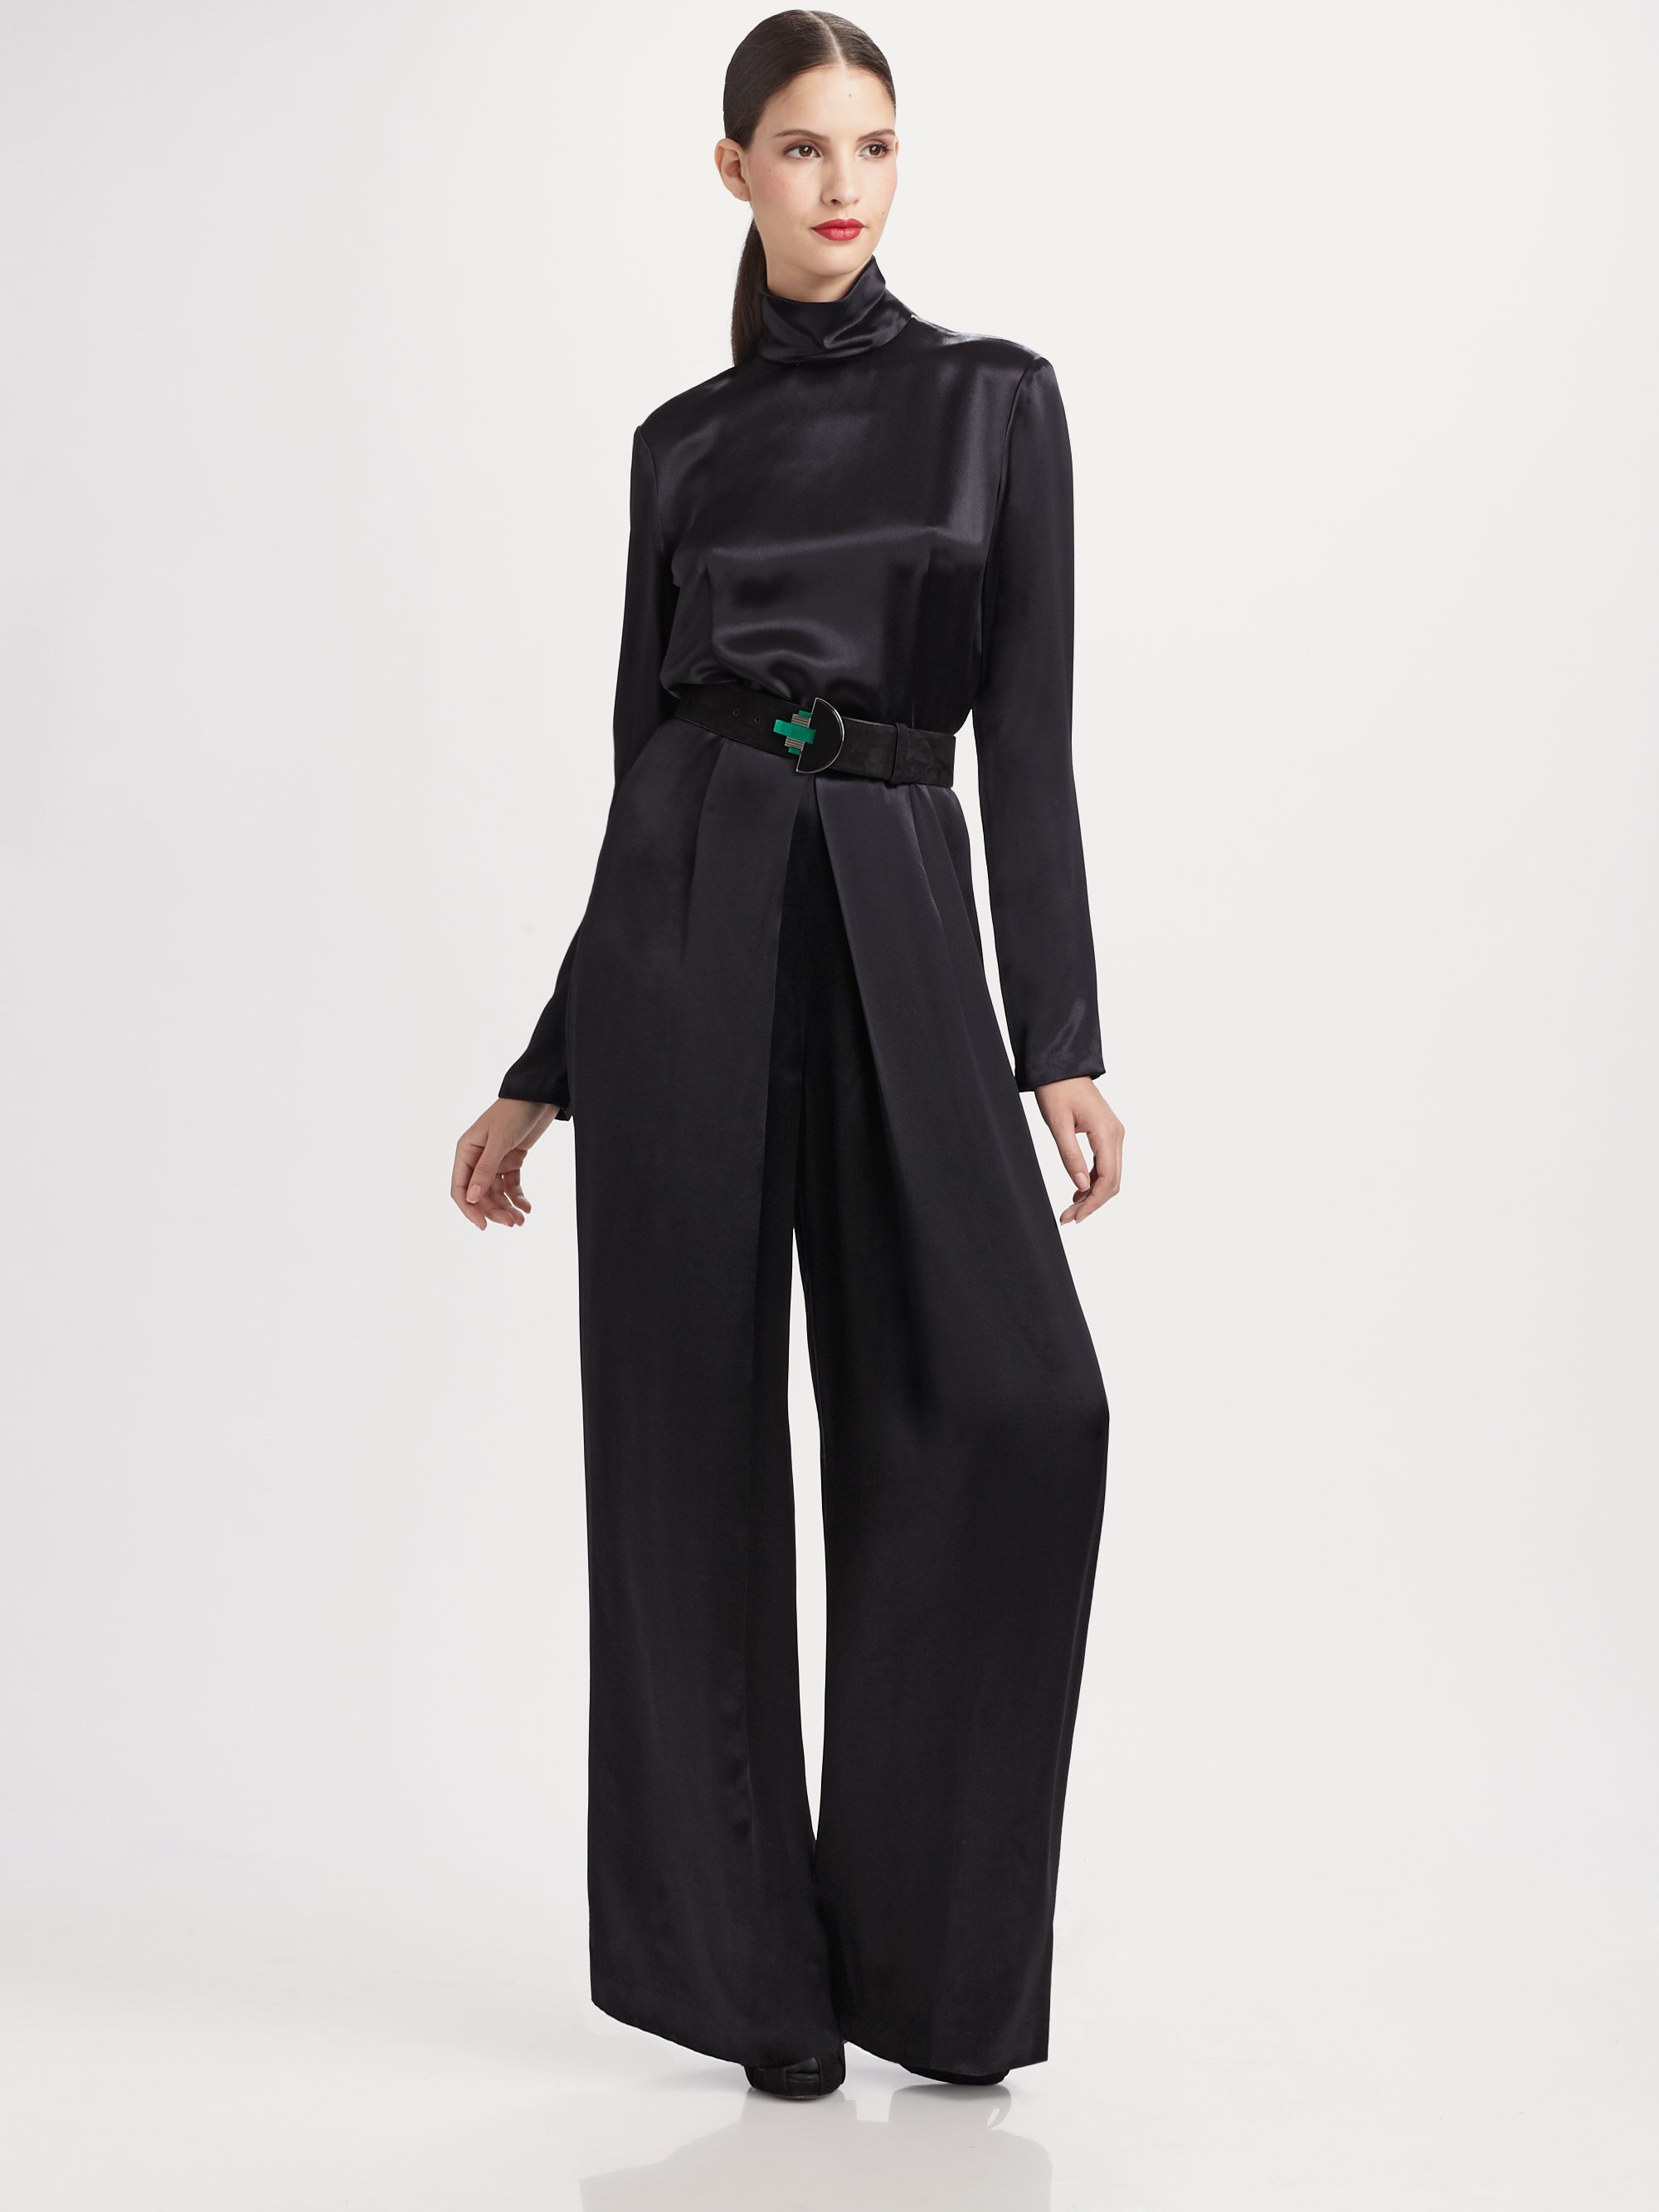 Lyst - Ralph Lauren Collection Satin Vivian Jumpsuit in Black